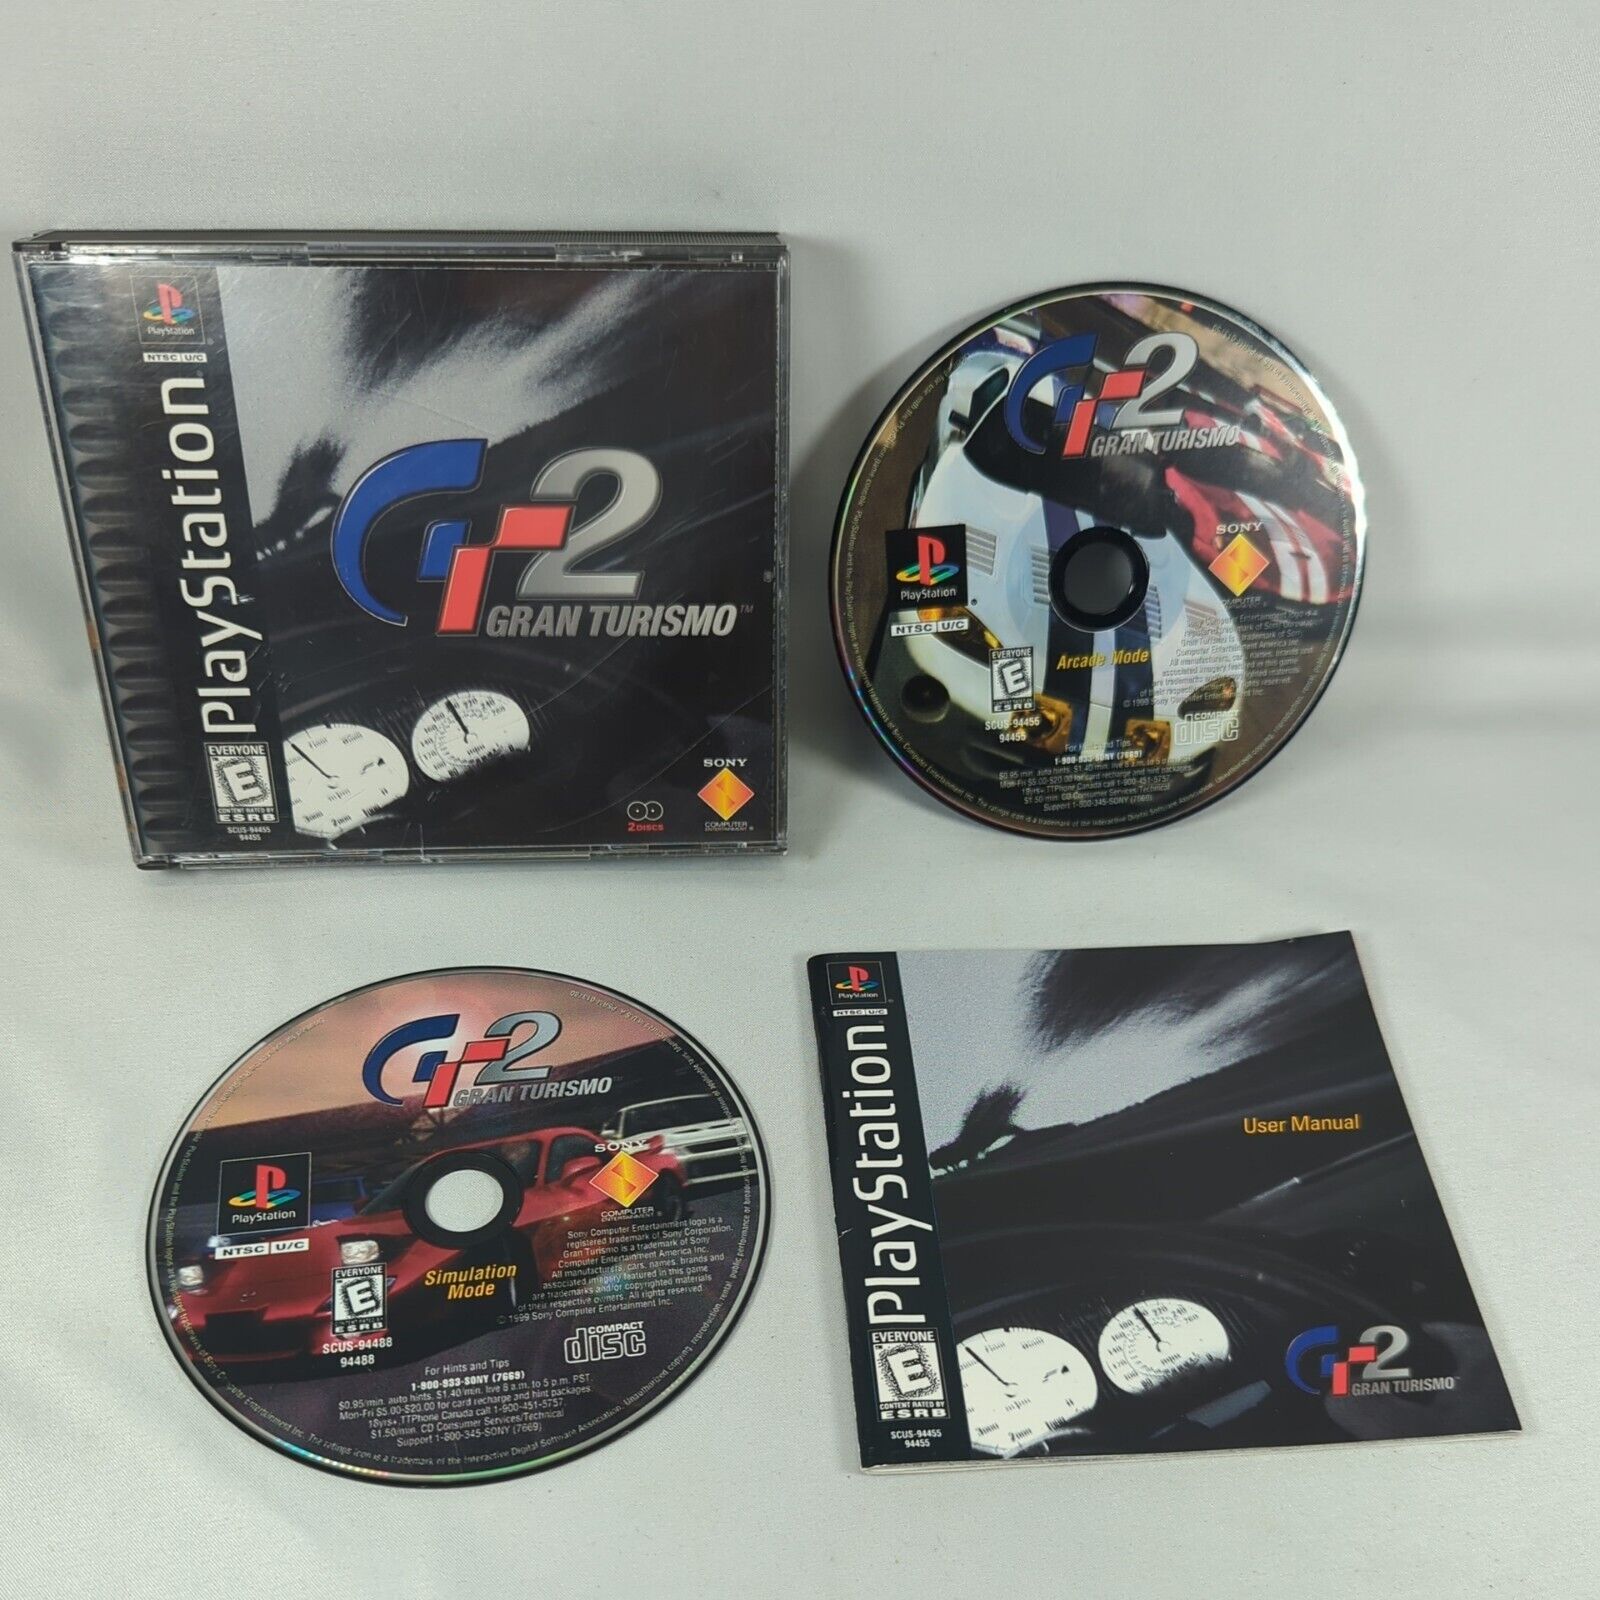 Gran Turismo 2 - Darkside Records